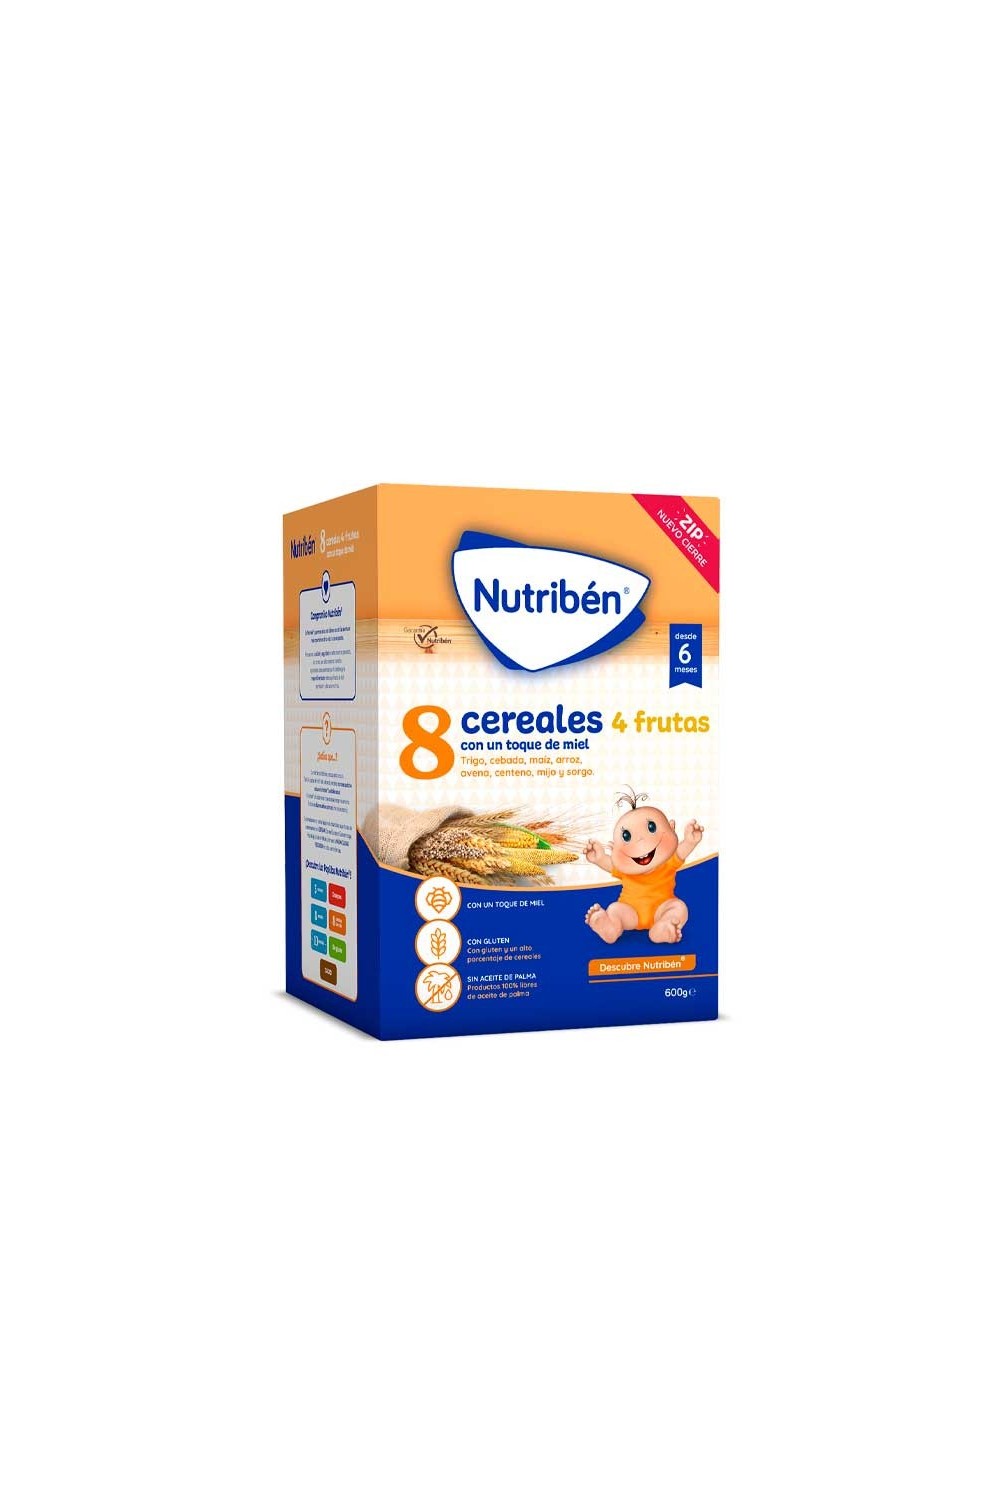 NUTRIBEN - Nutribén 8 Cereals and Honey 4 Fruits 600g